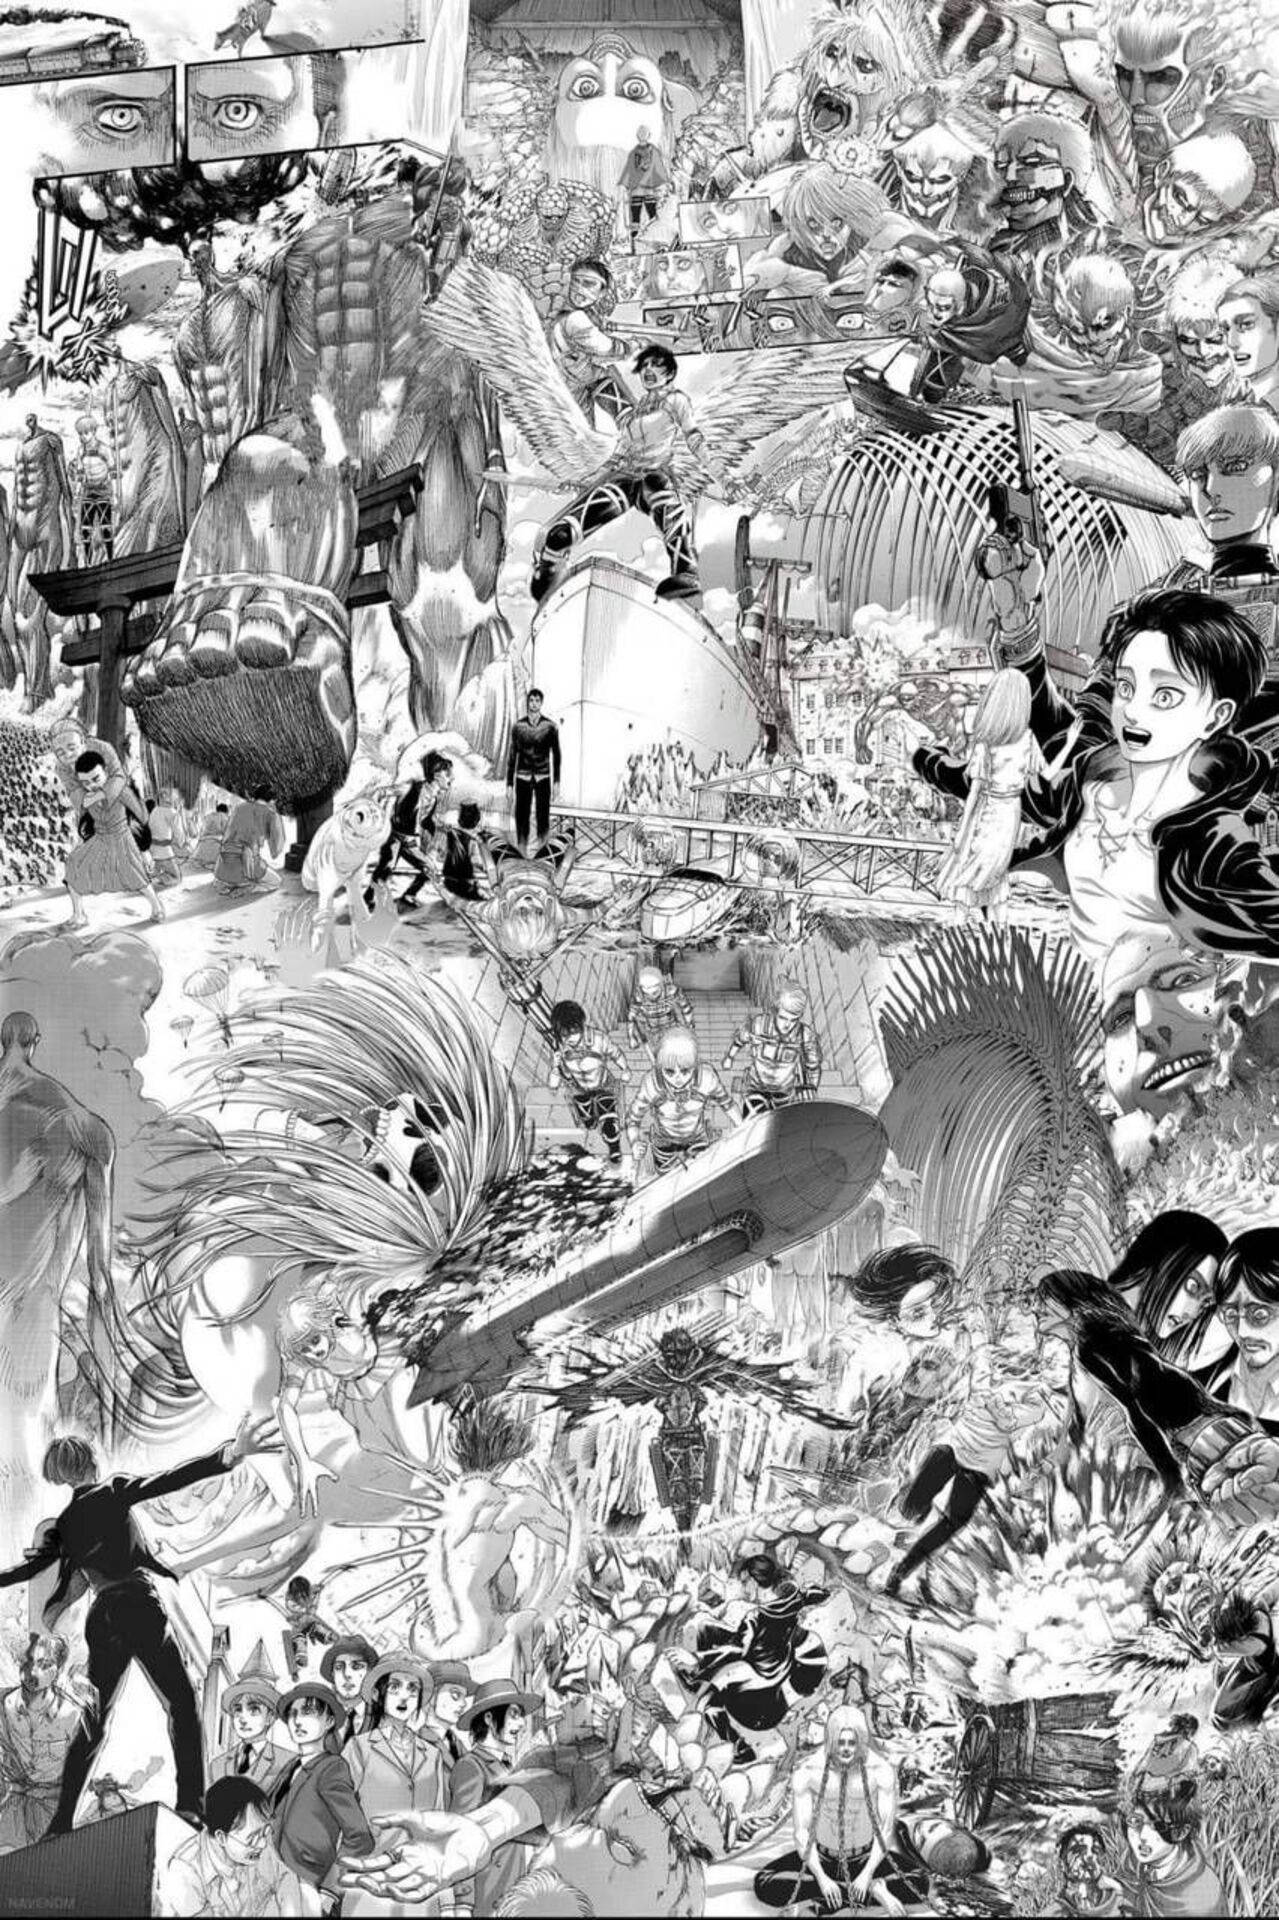 Manga 1279X1920 Wallpaper and Background Image